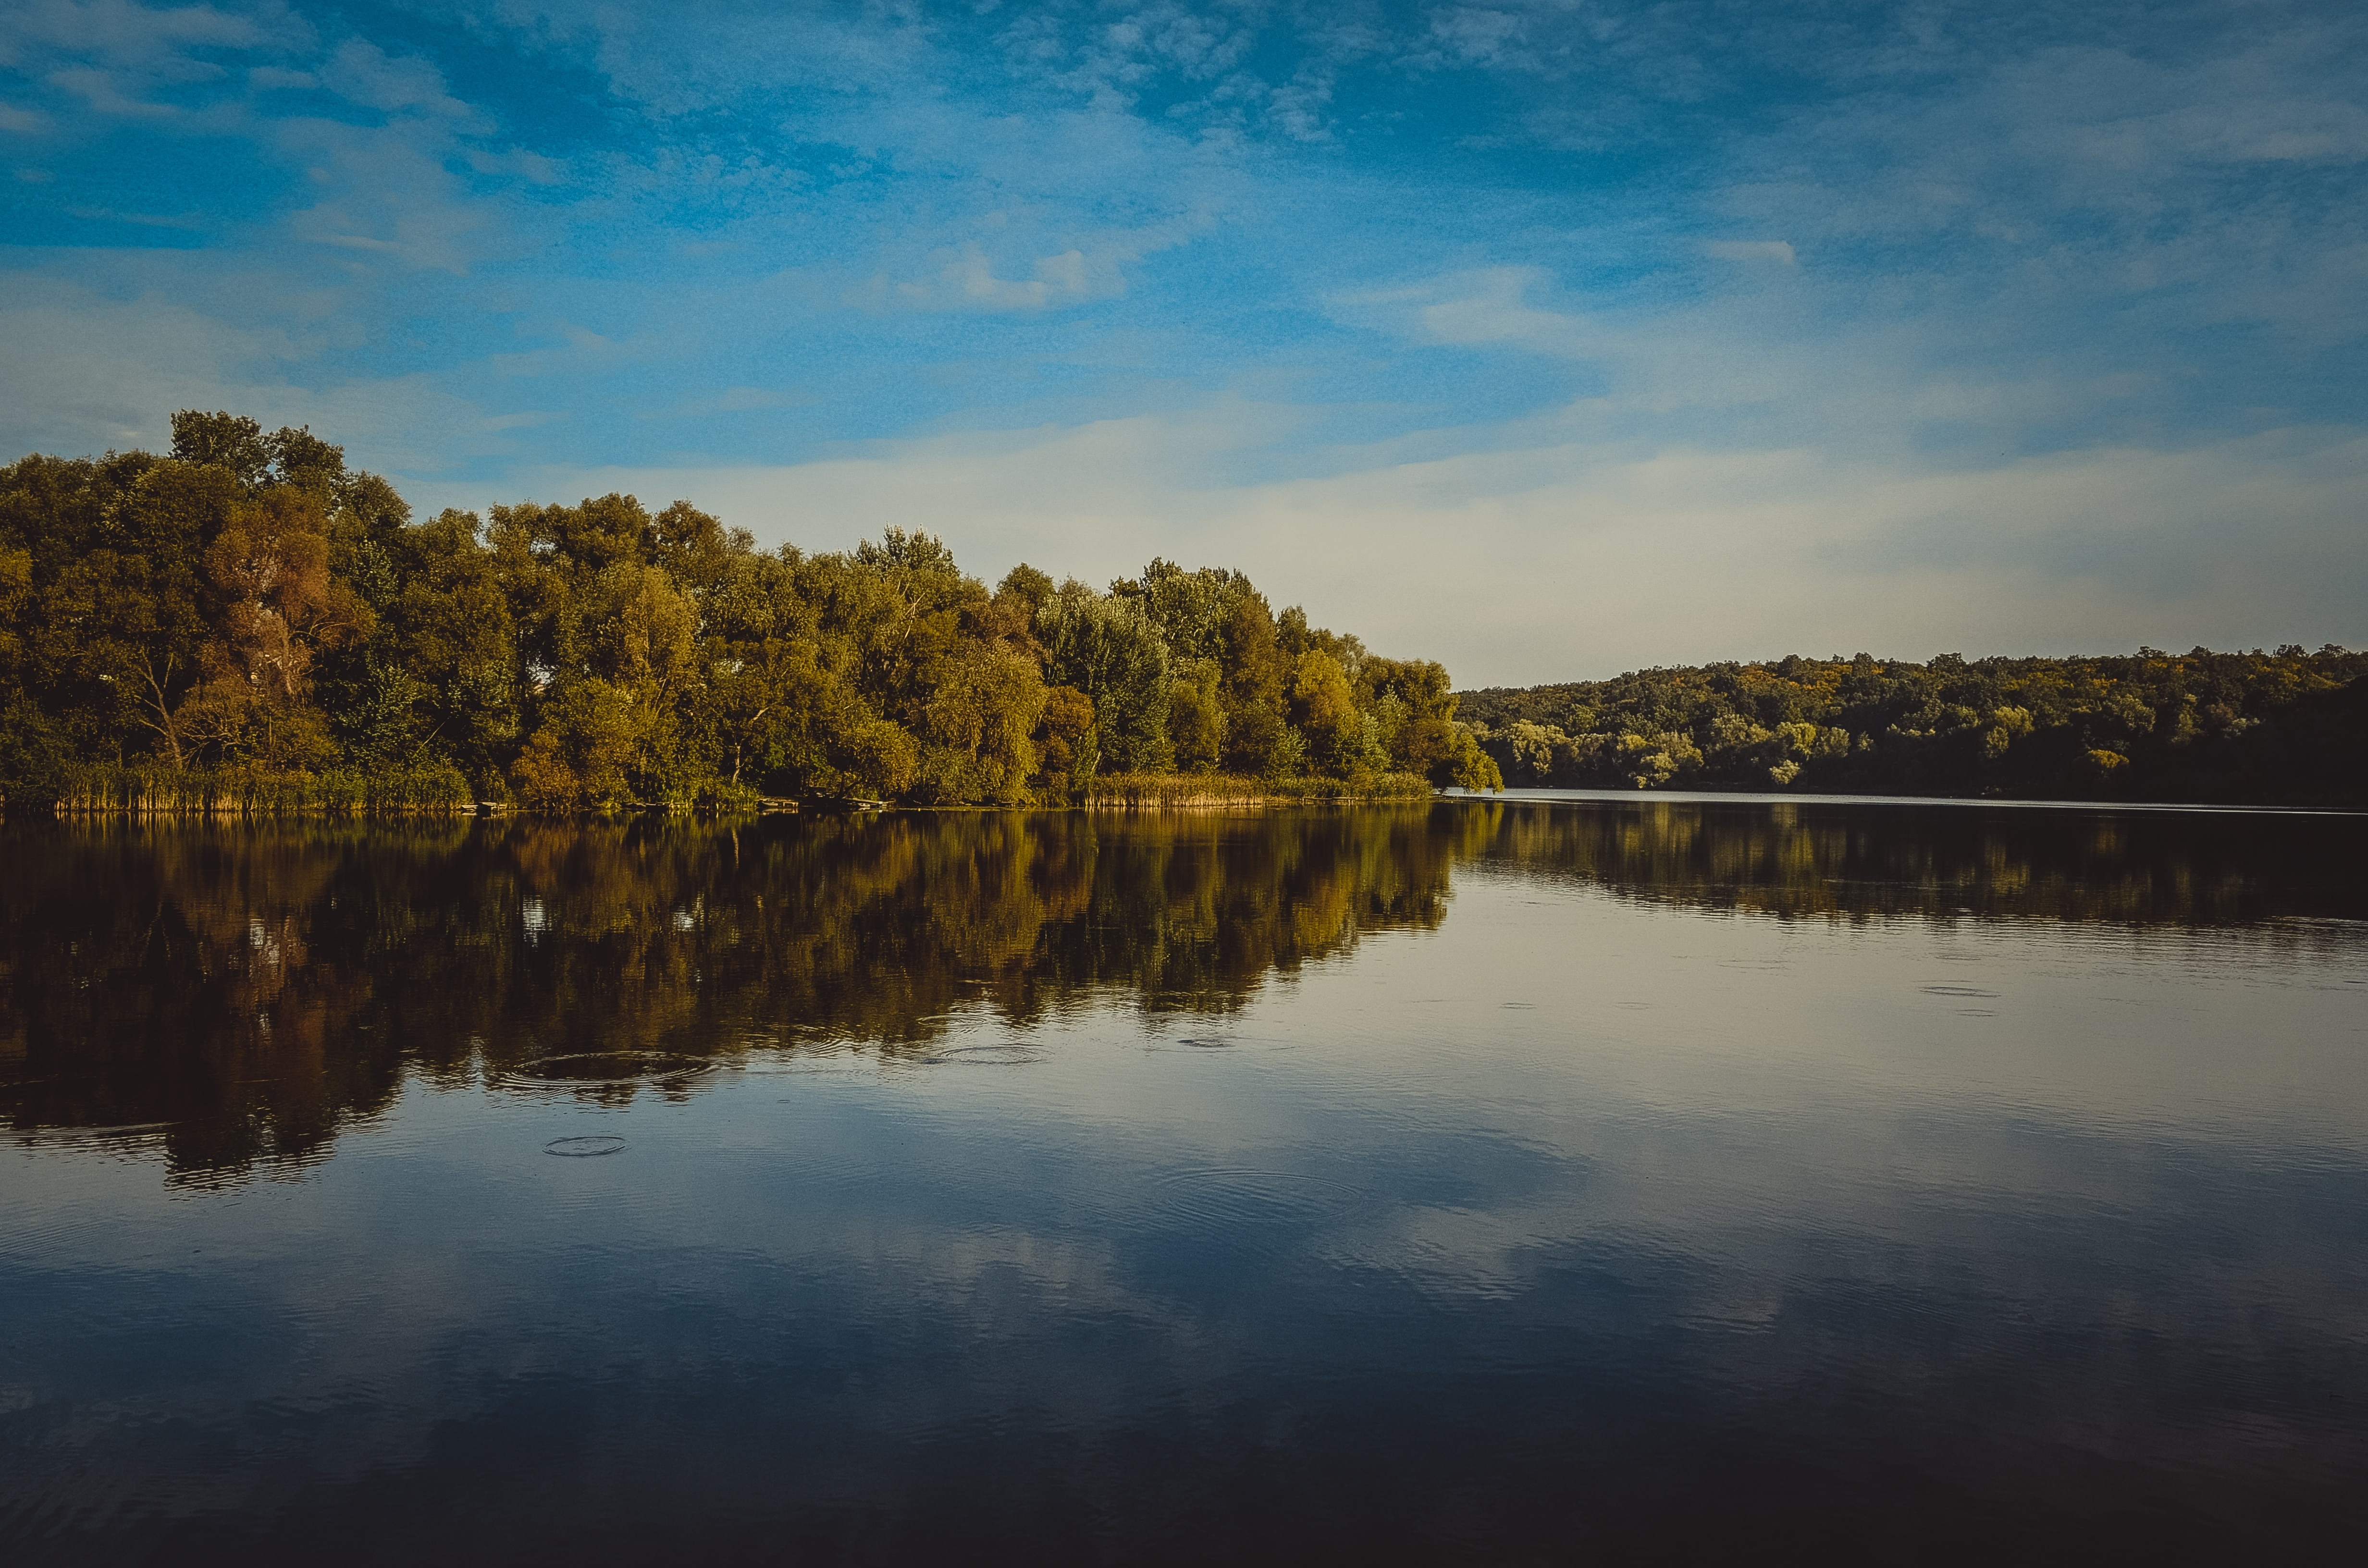 Dawn, Landscape, Nature, Morning, River, reflection, lake